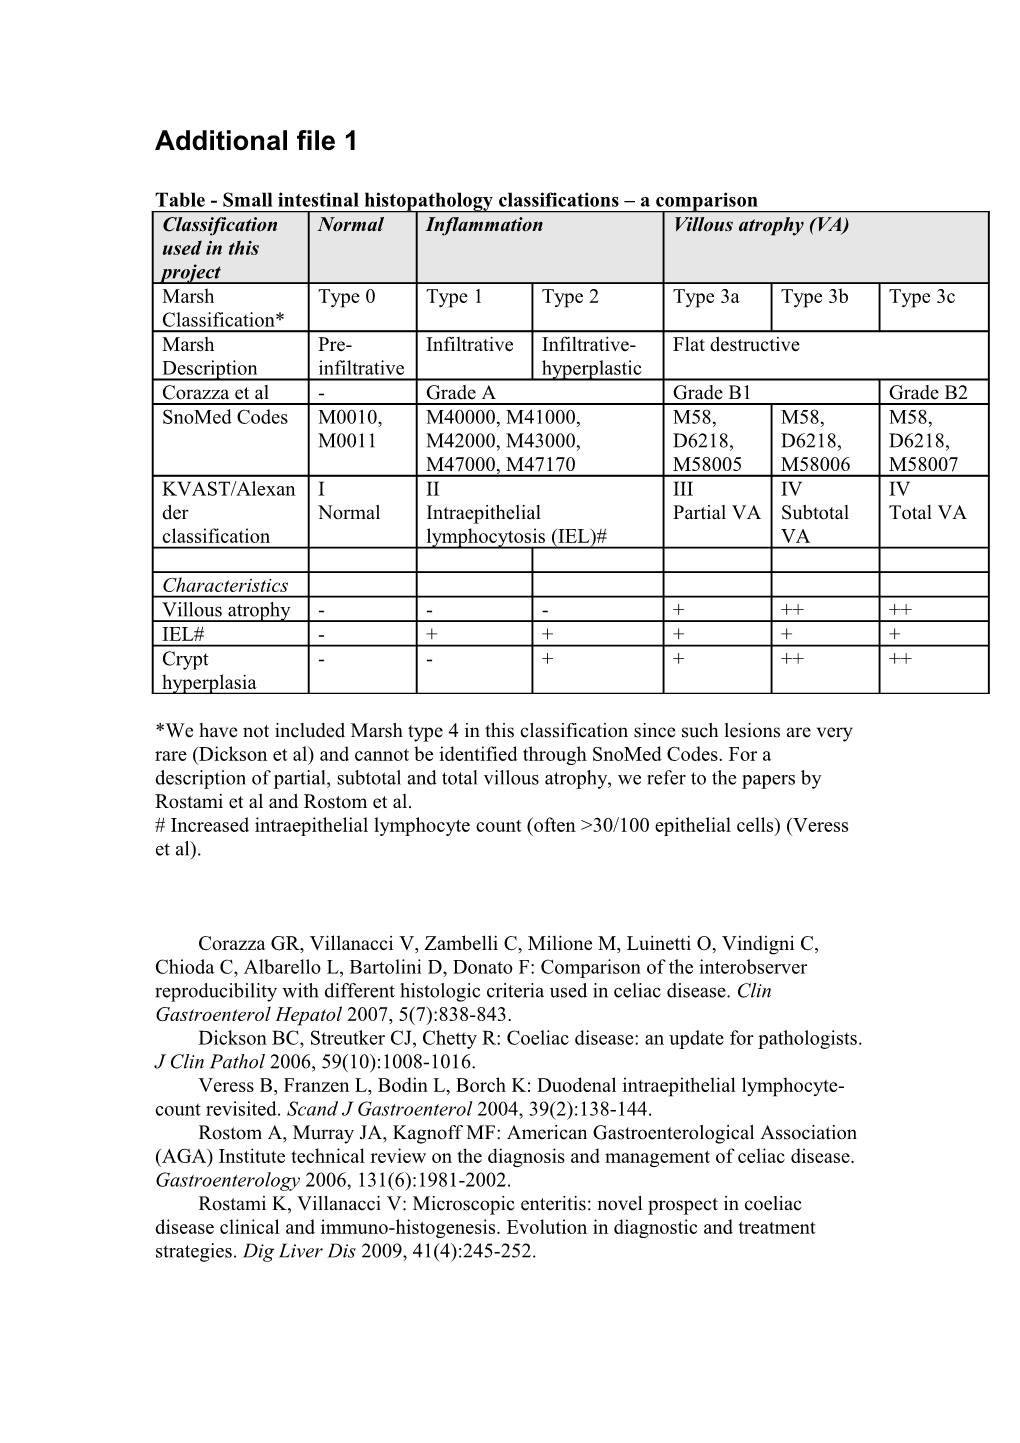 Table - Small Intestinal Histopathology Classifications a Comparison